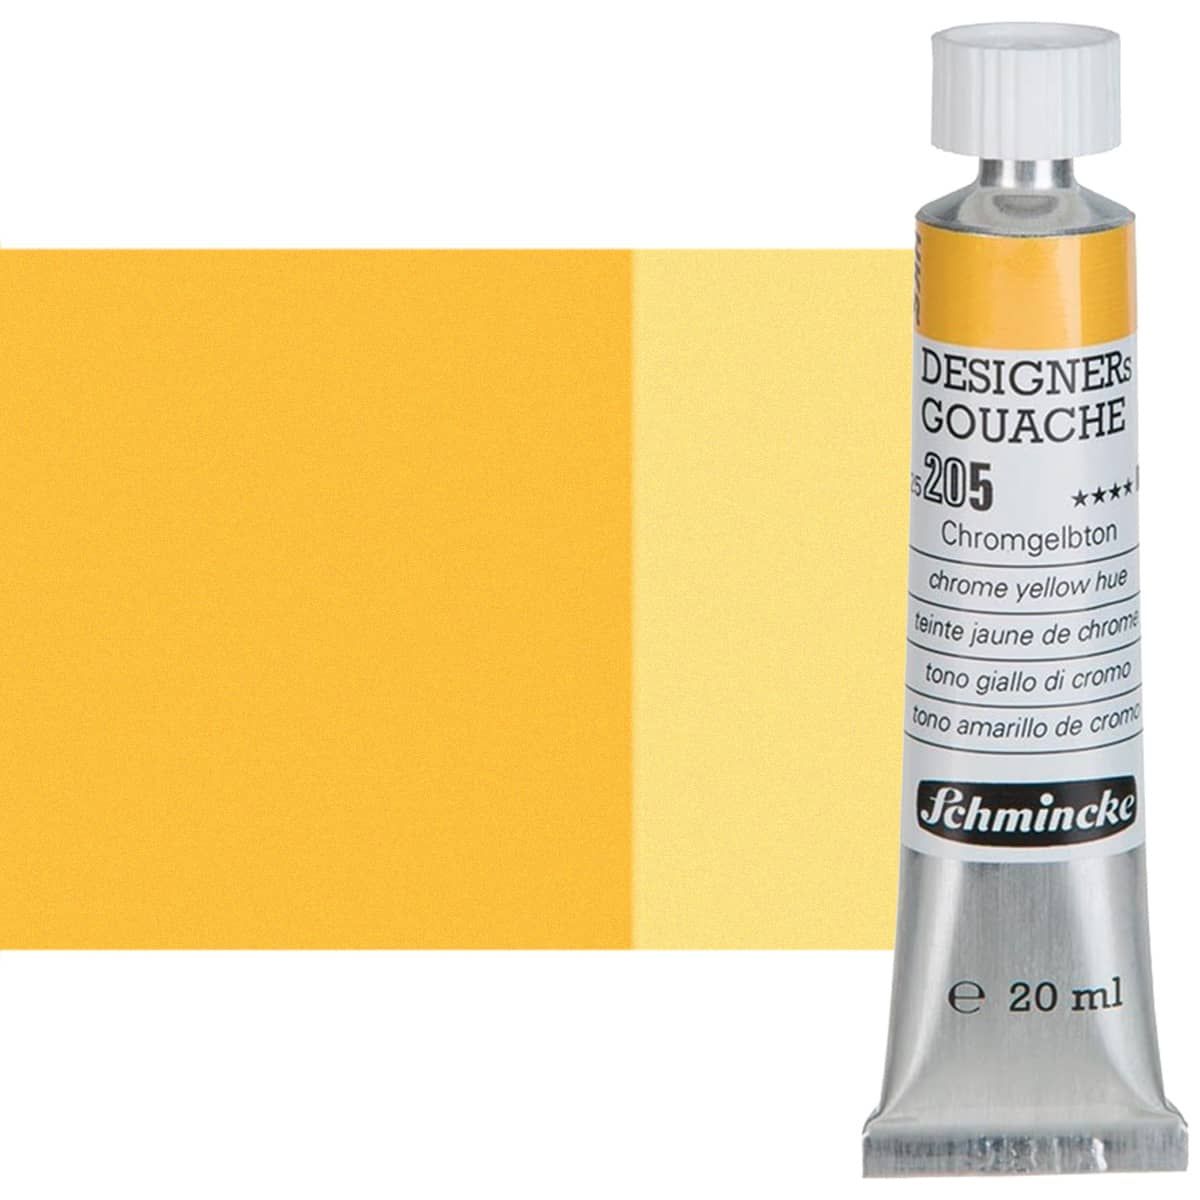 Schmincke Designers' Gouache Chrome Yellow Hue, 20ml